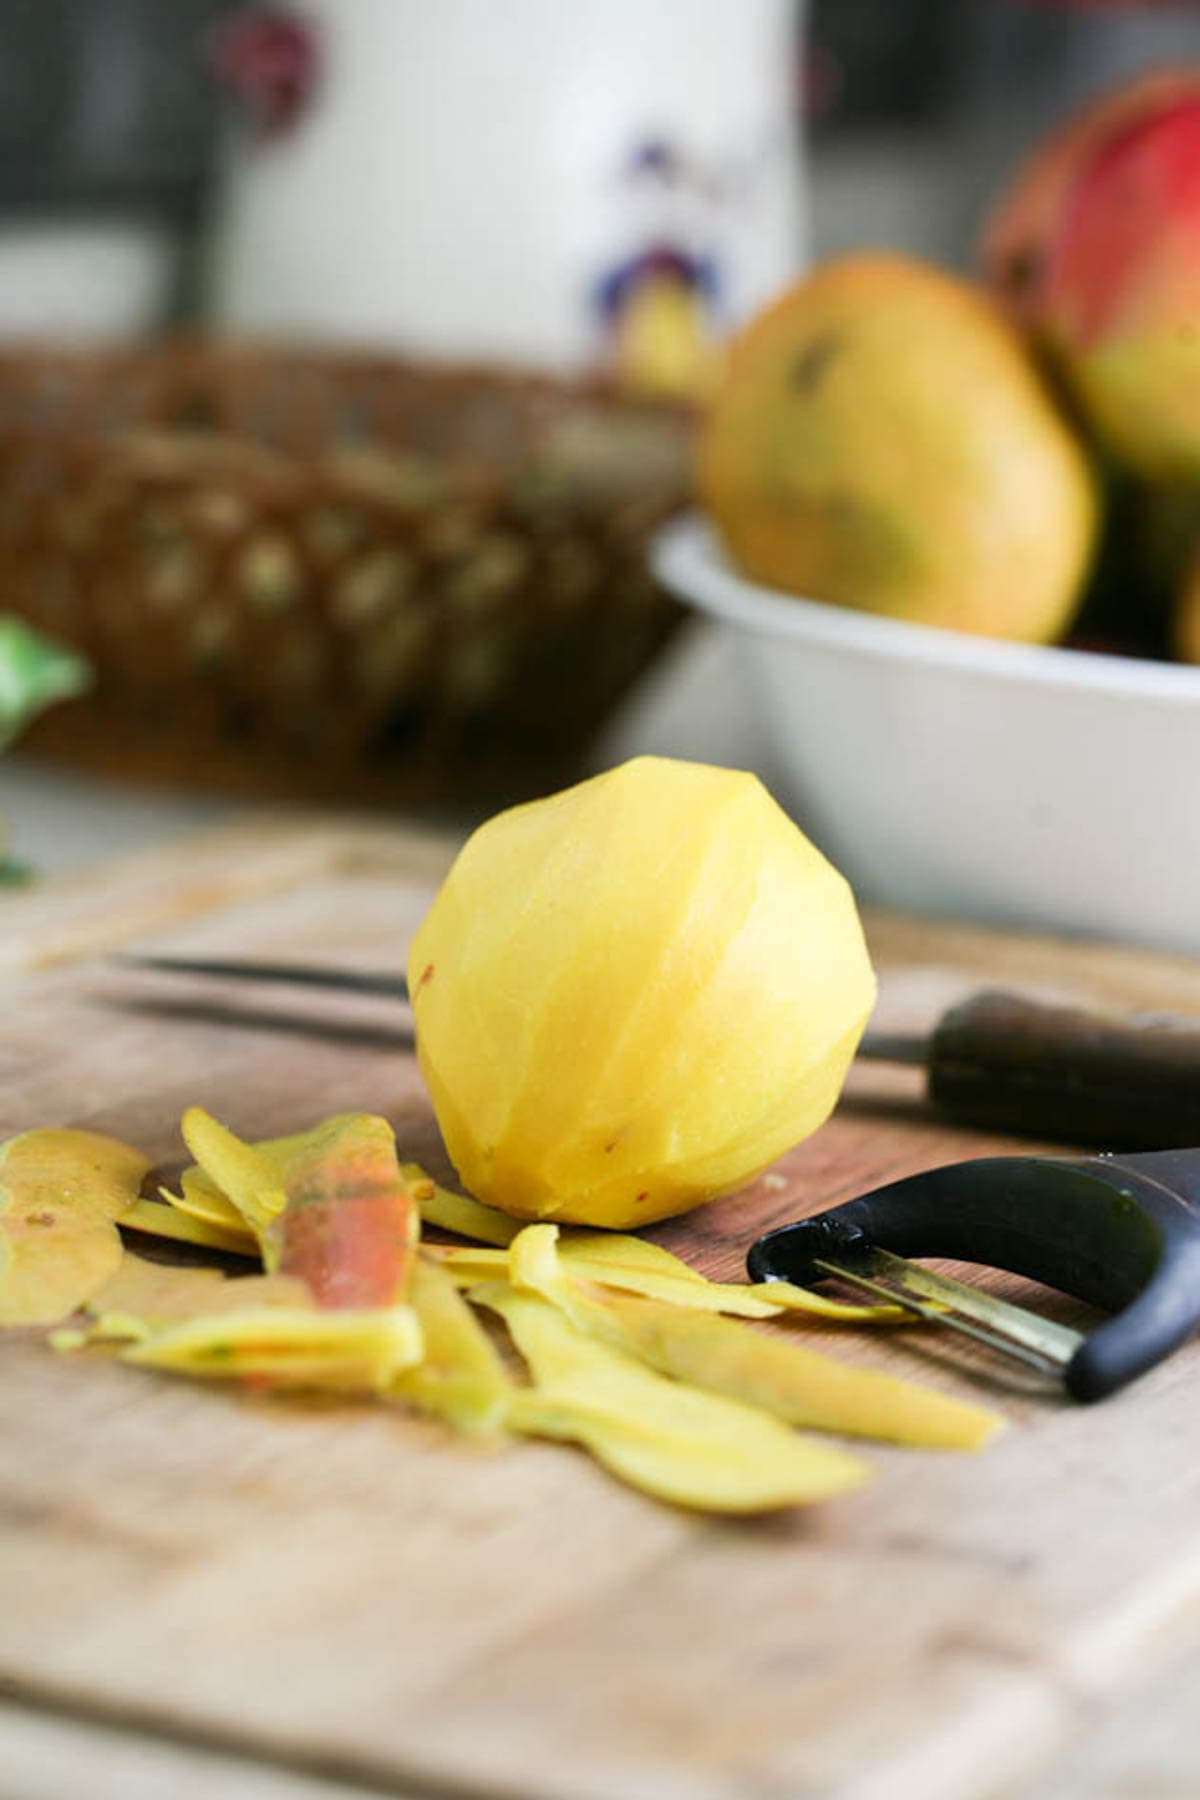 peeling the mango